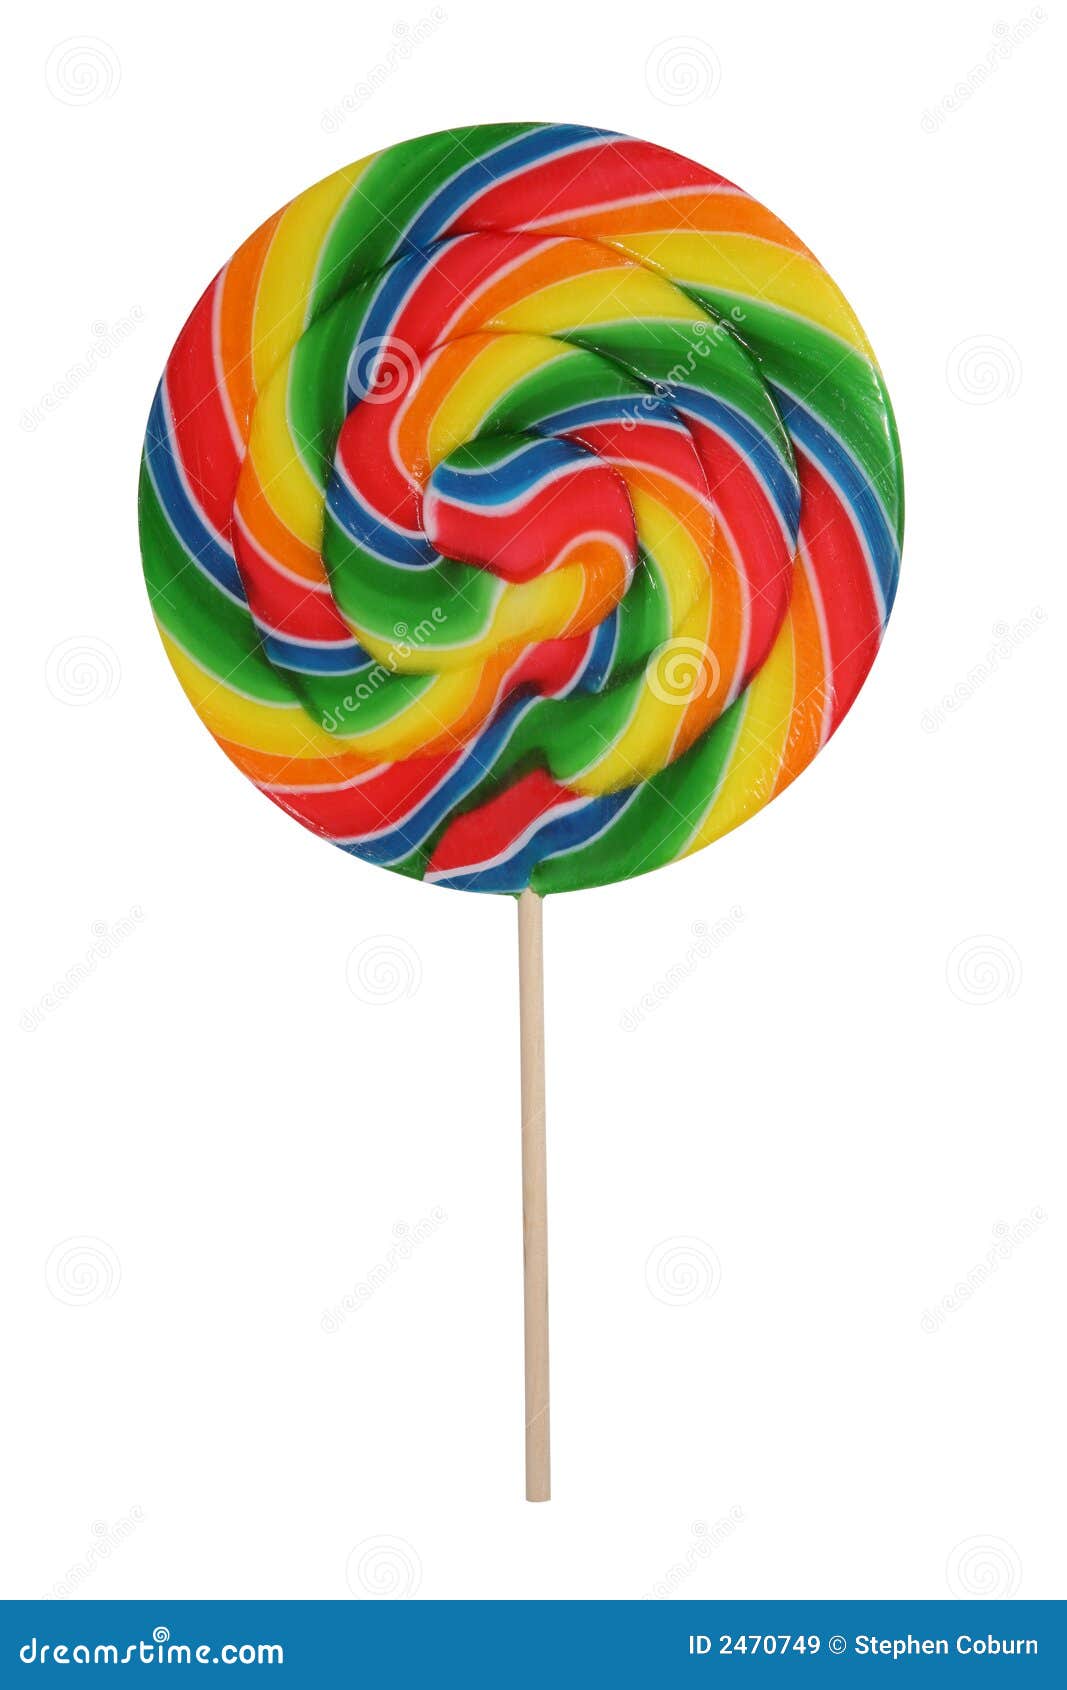 rainbow lollipop clipart - photo #43